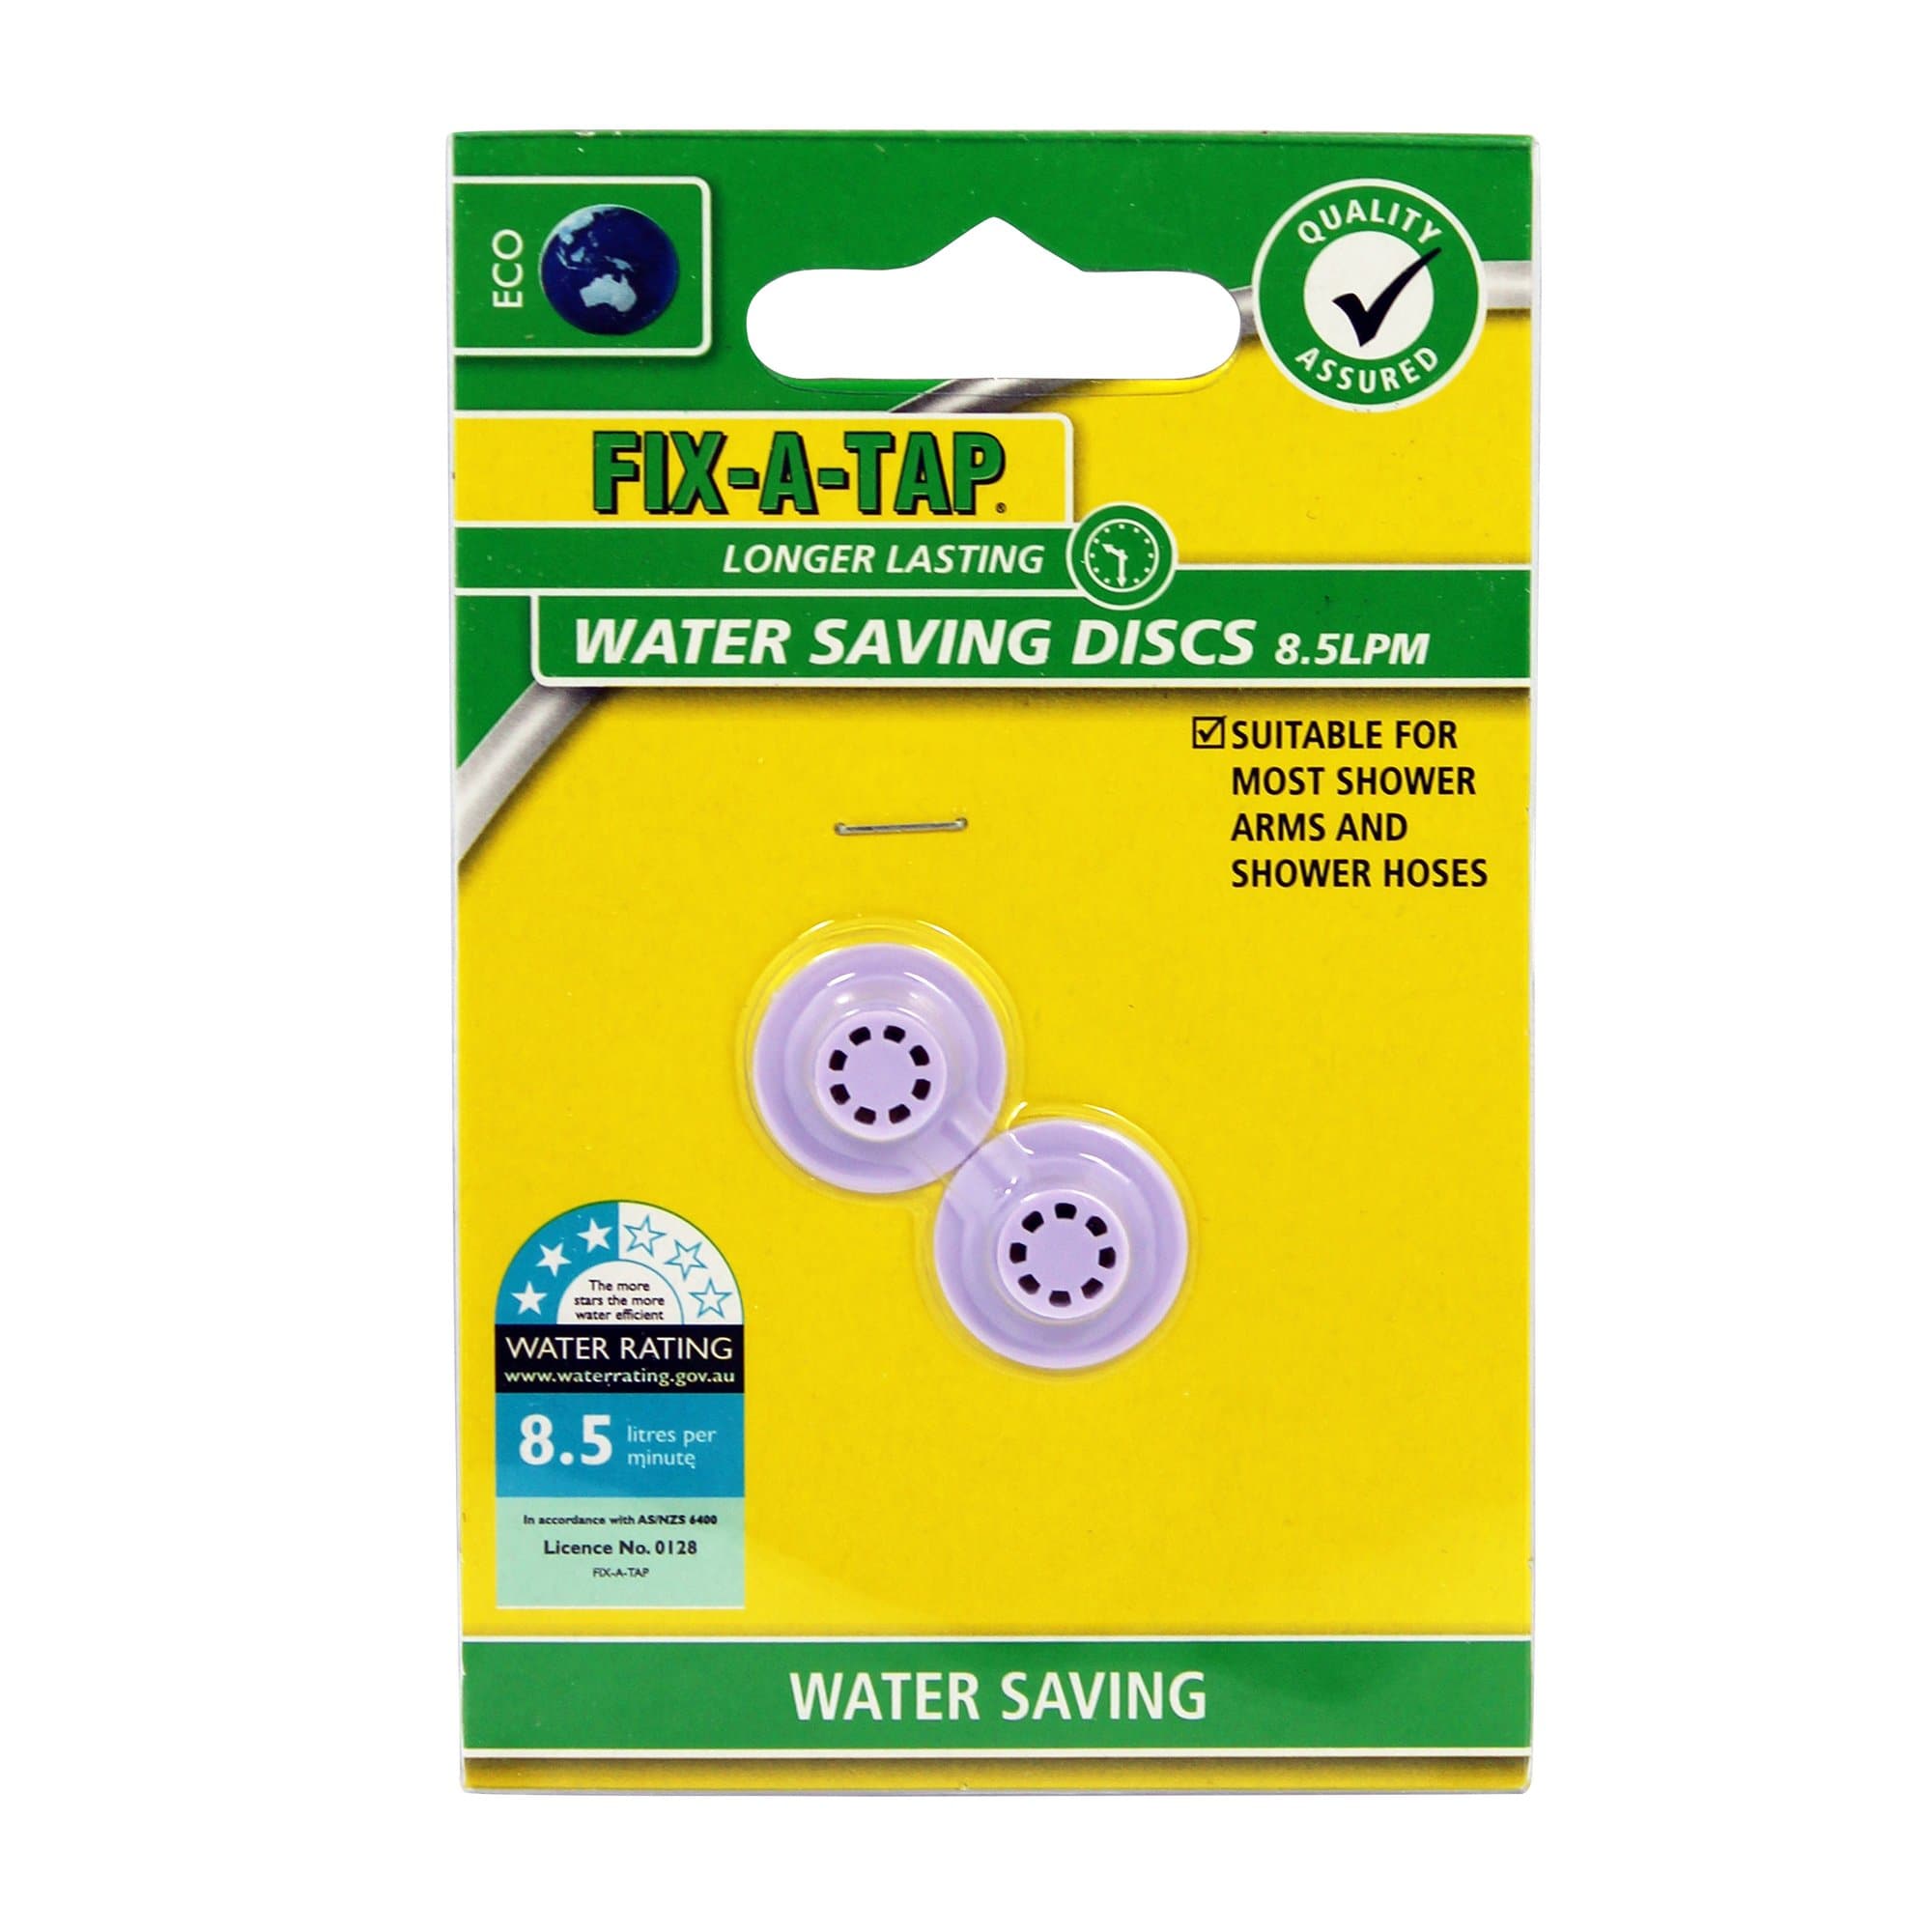 FIX-A-TAP Water Saving Discs 8.5 LPM 221261 - Double Bay Hardware